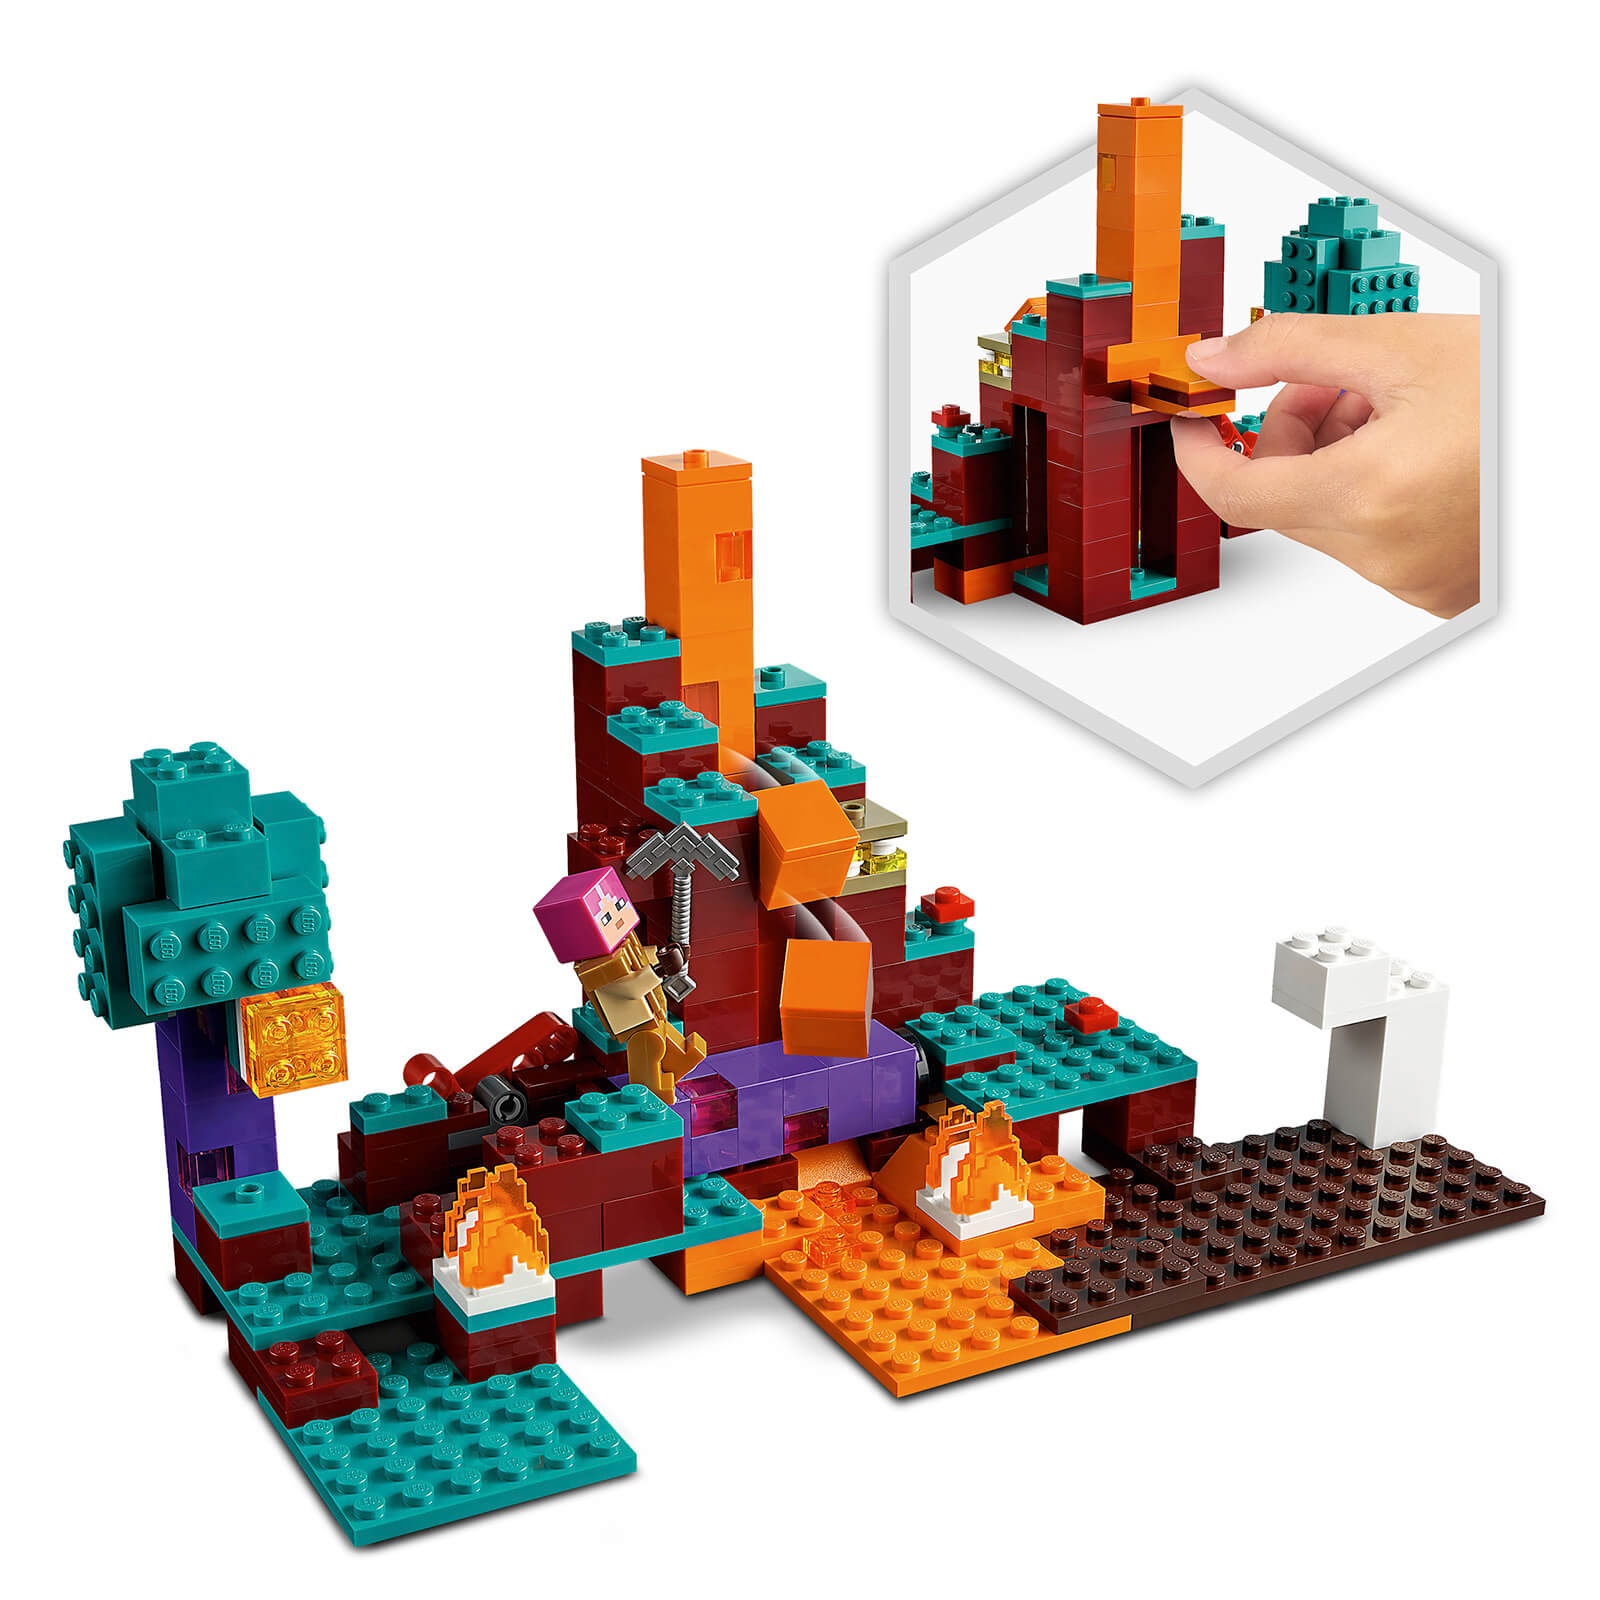 LEGO Minecraft: The Warped Forest Building Set (21168)